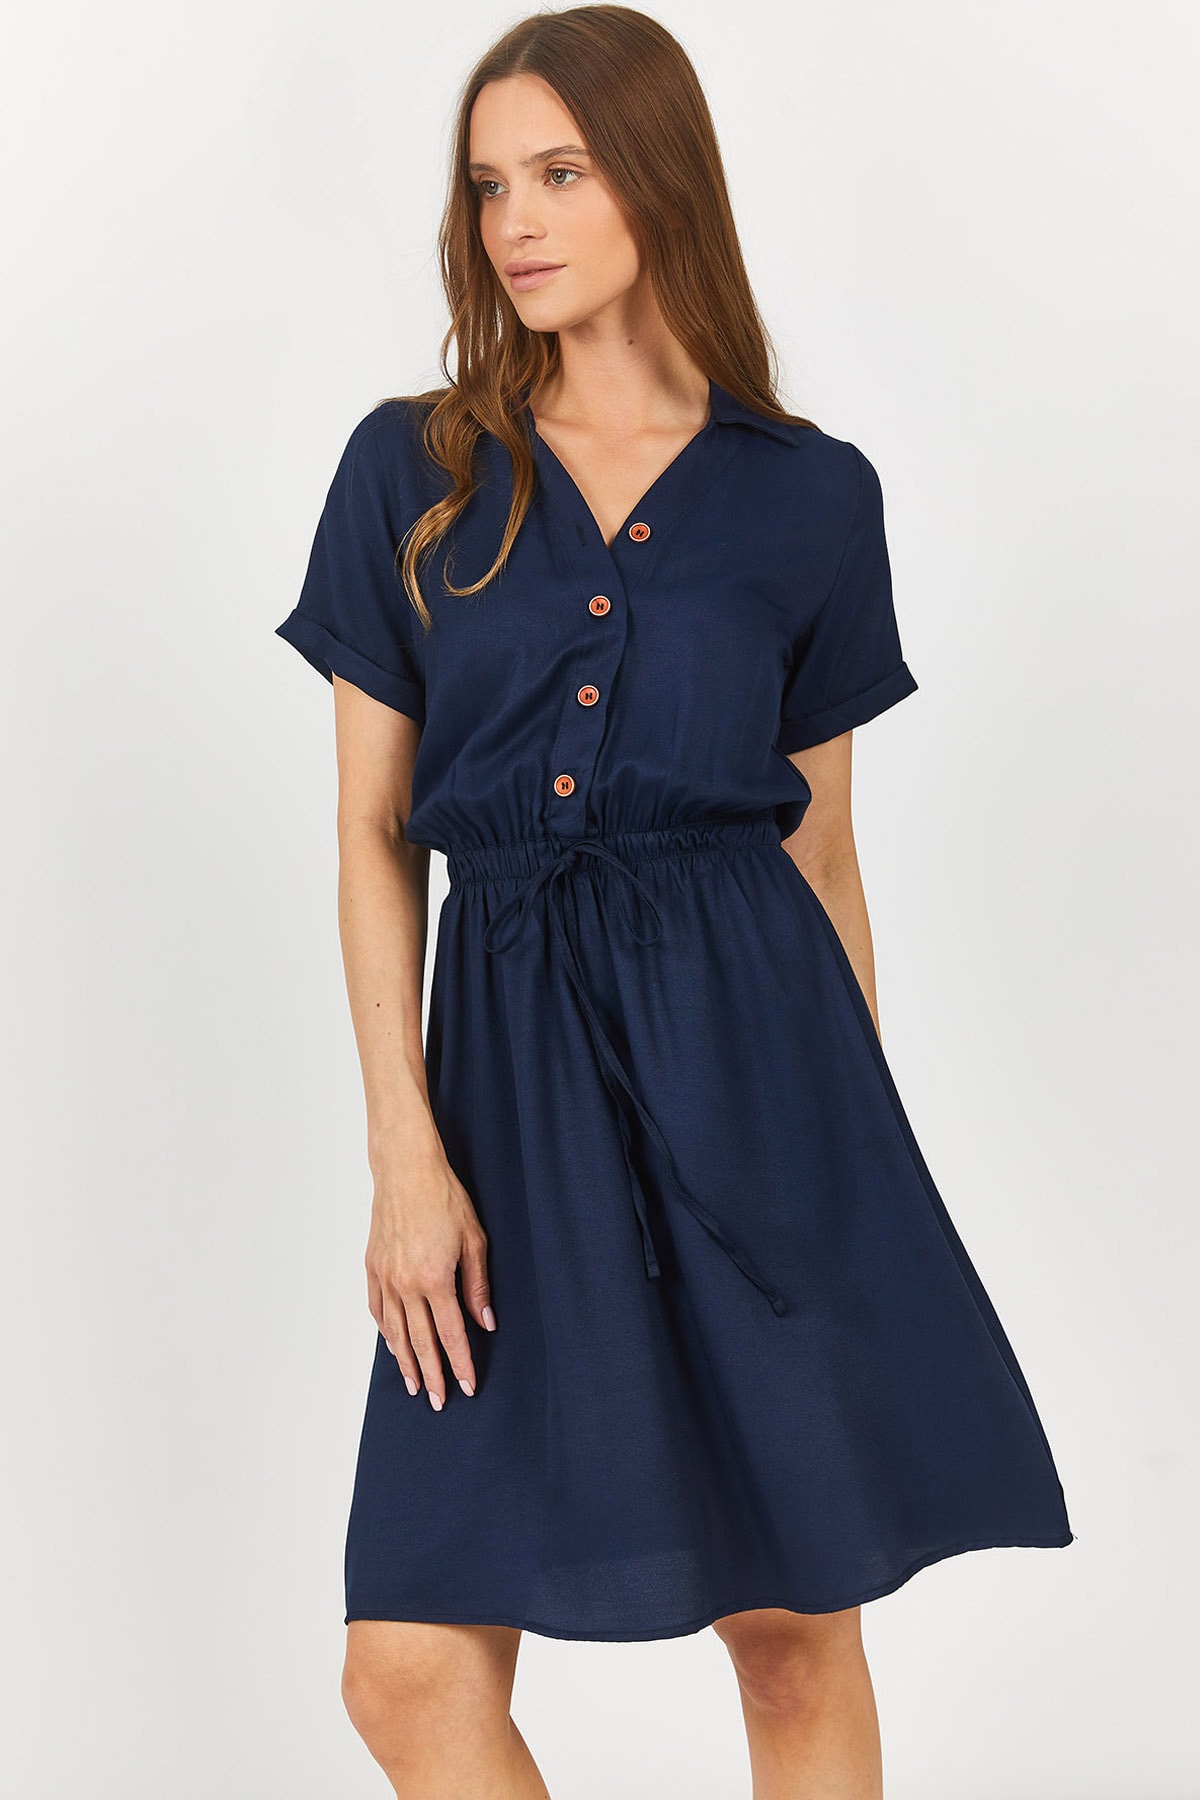 Levně armonika Women's Navy Blue Short Sleeve Shirt Dress with Elastic Waist